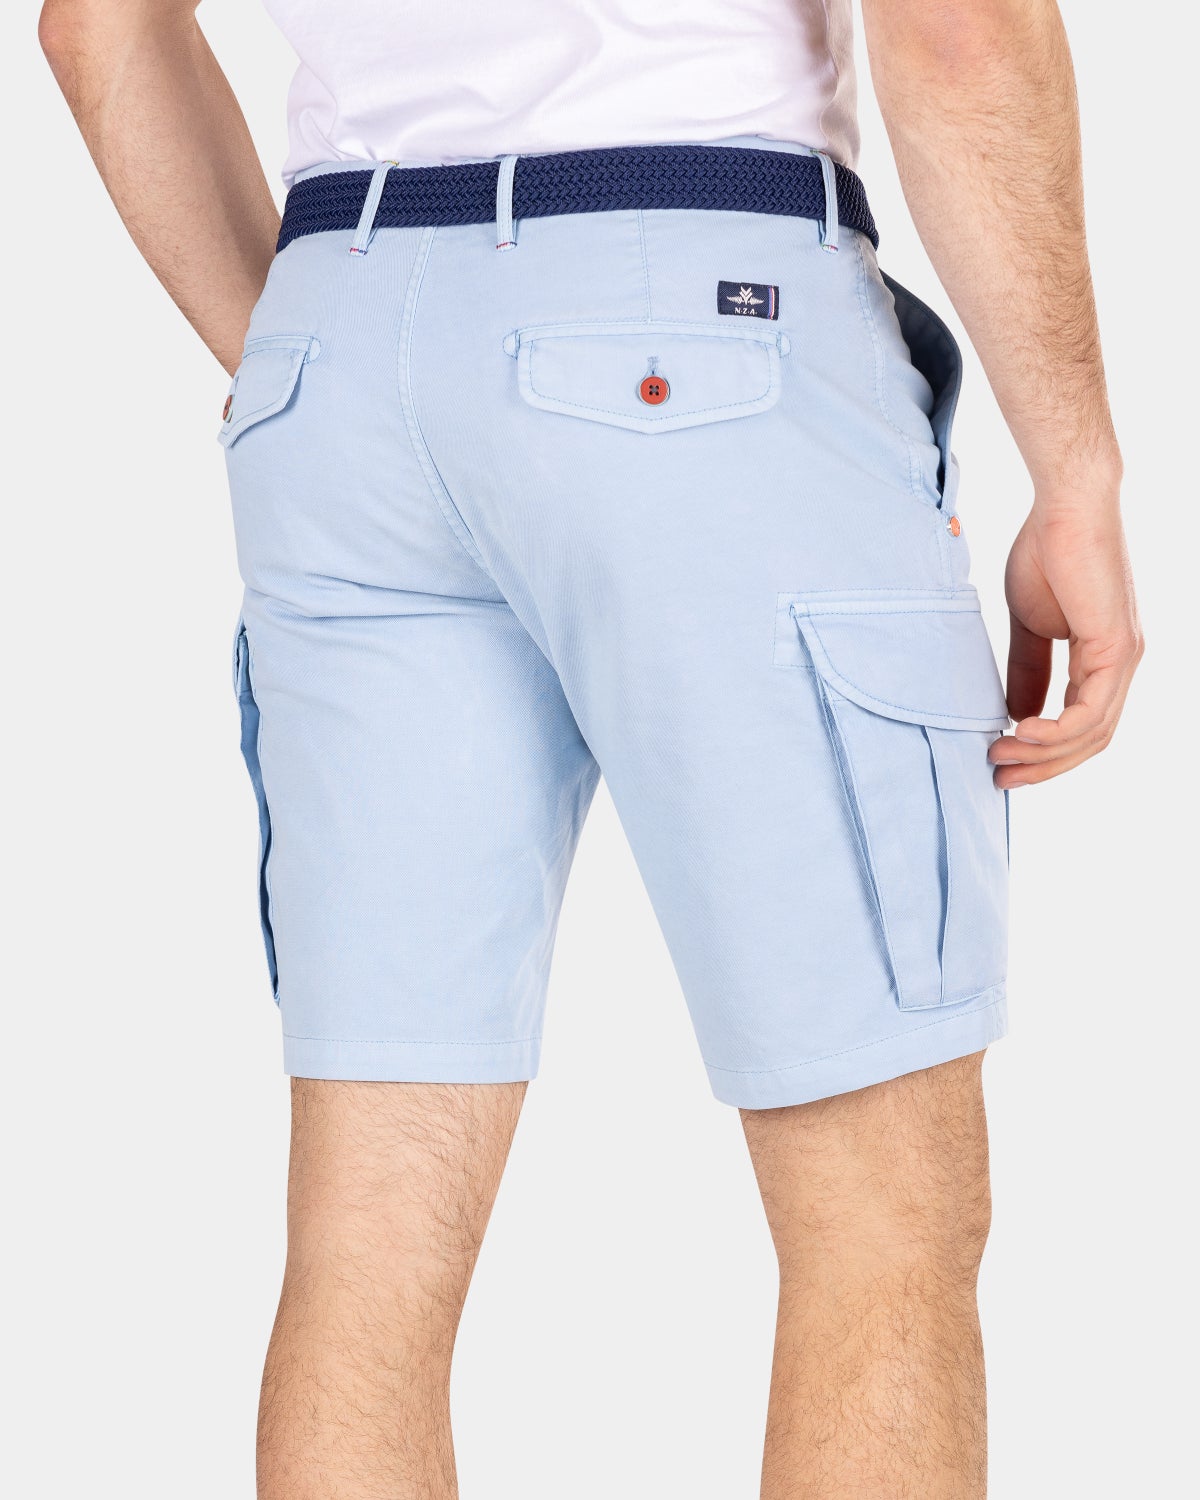 Plain shorts - Universal Blue